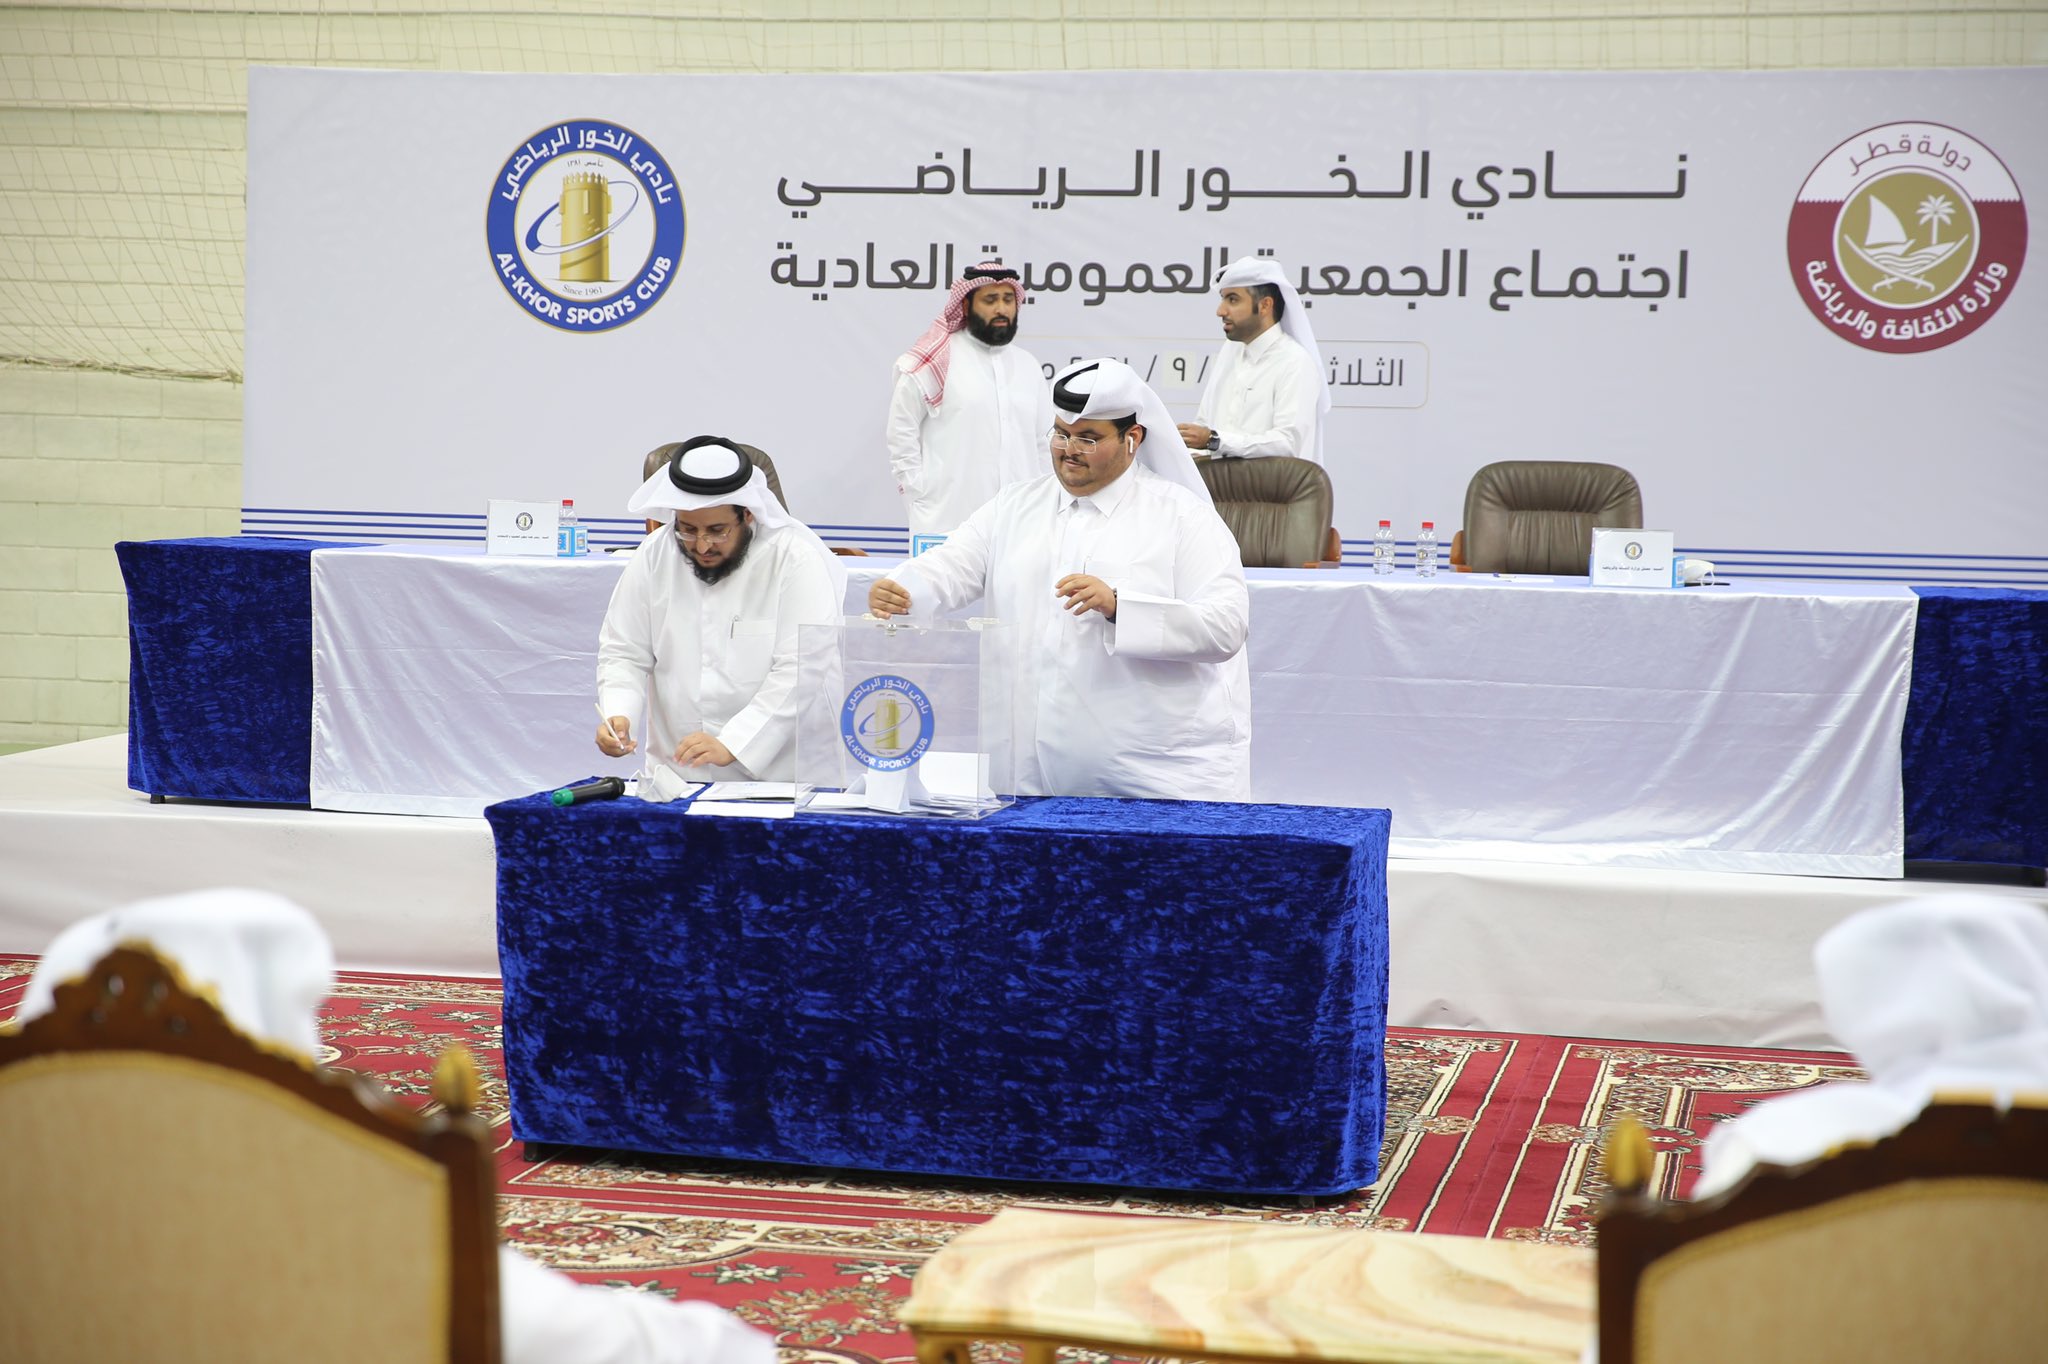 Sultan Al Mohannadi Elected President of Al-Khor SC